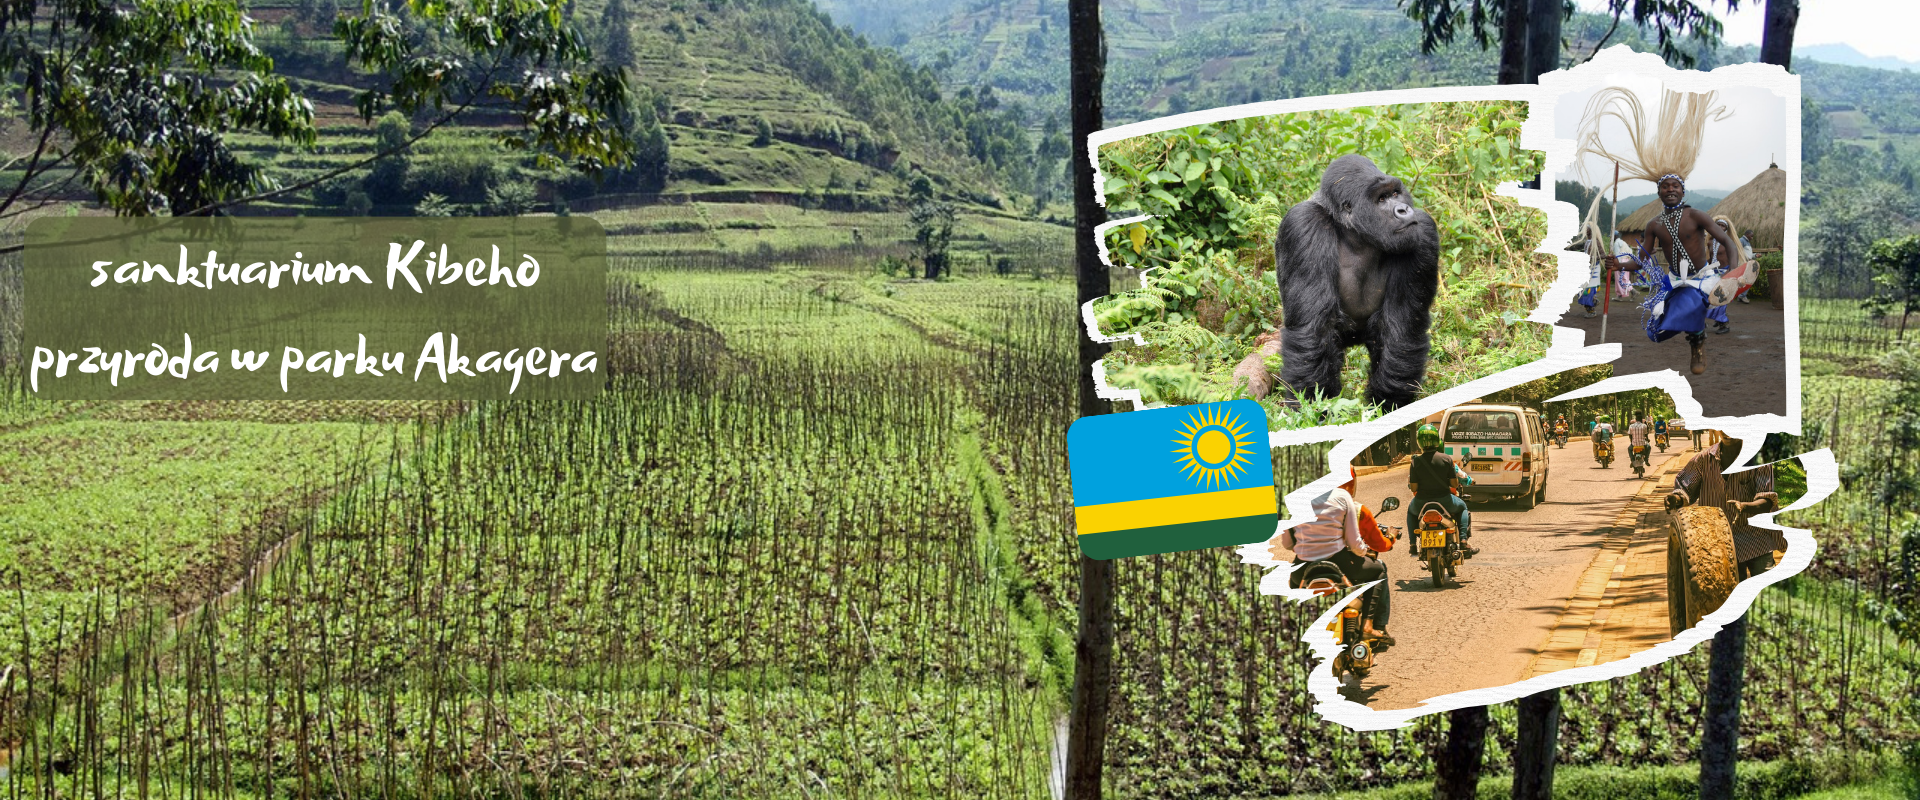 Rwanda - Kibeho i inne sanktuaria Afryki